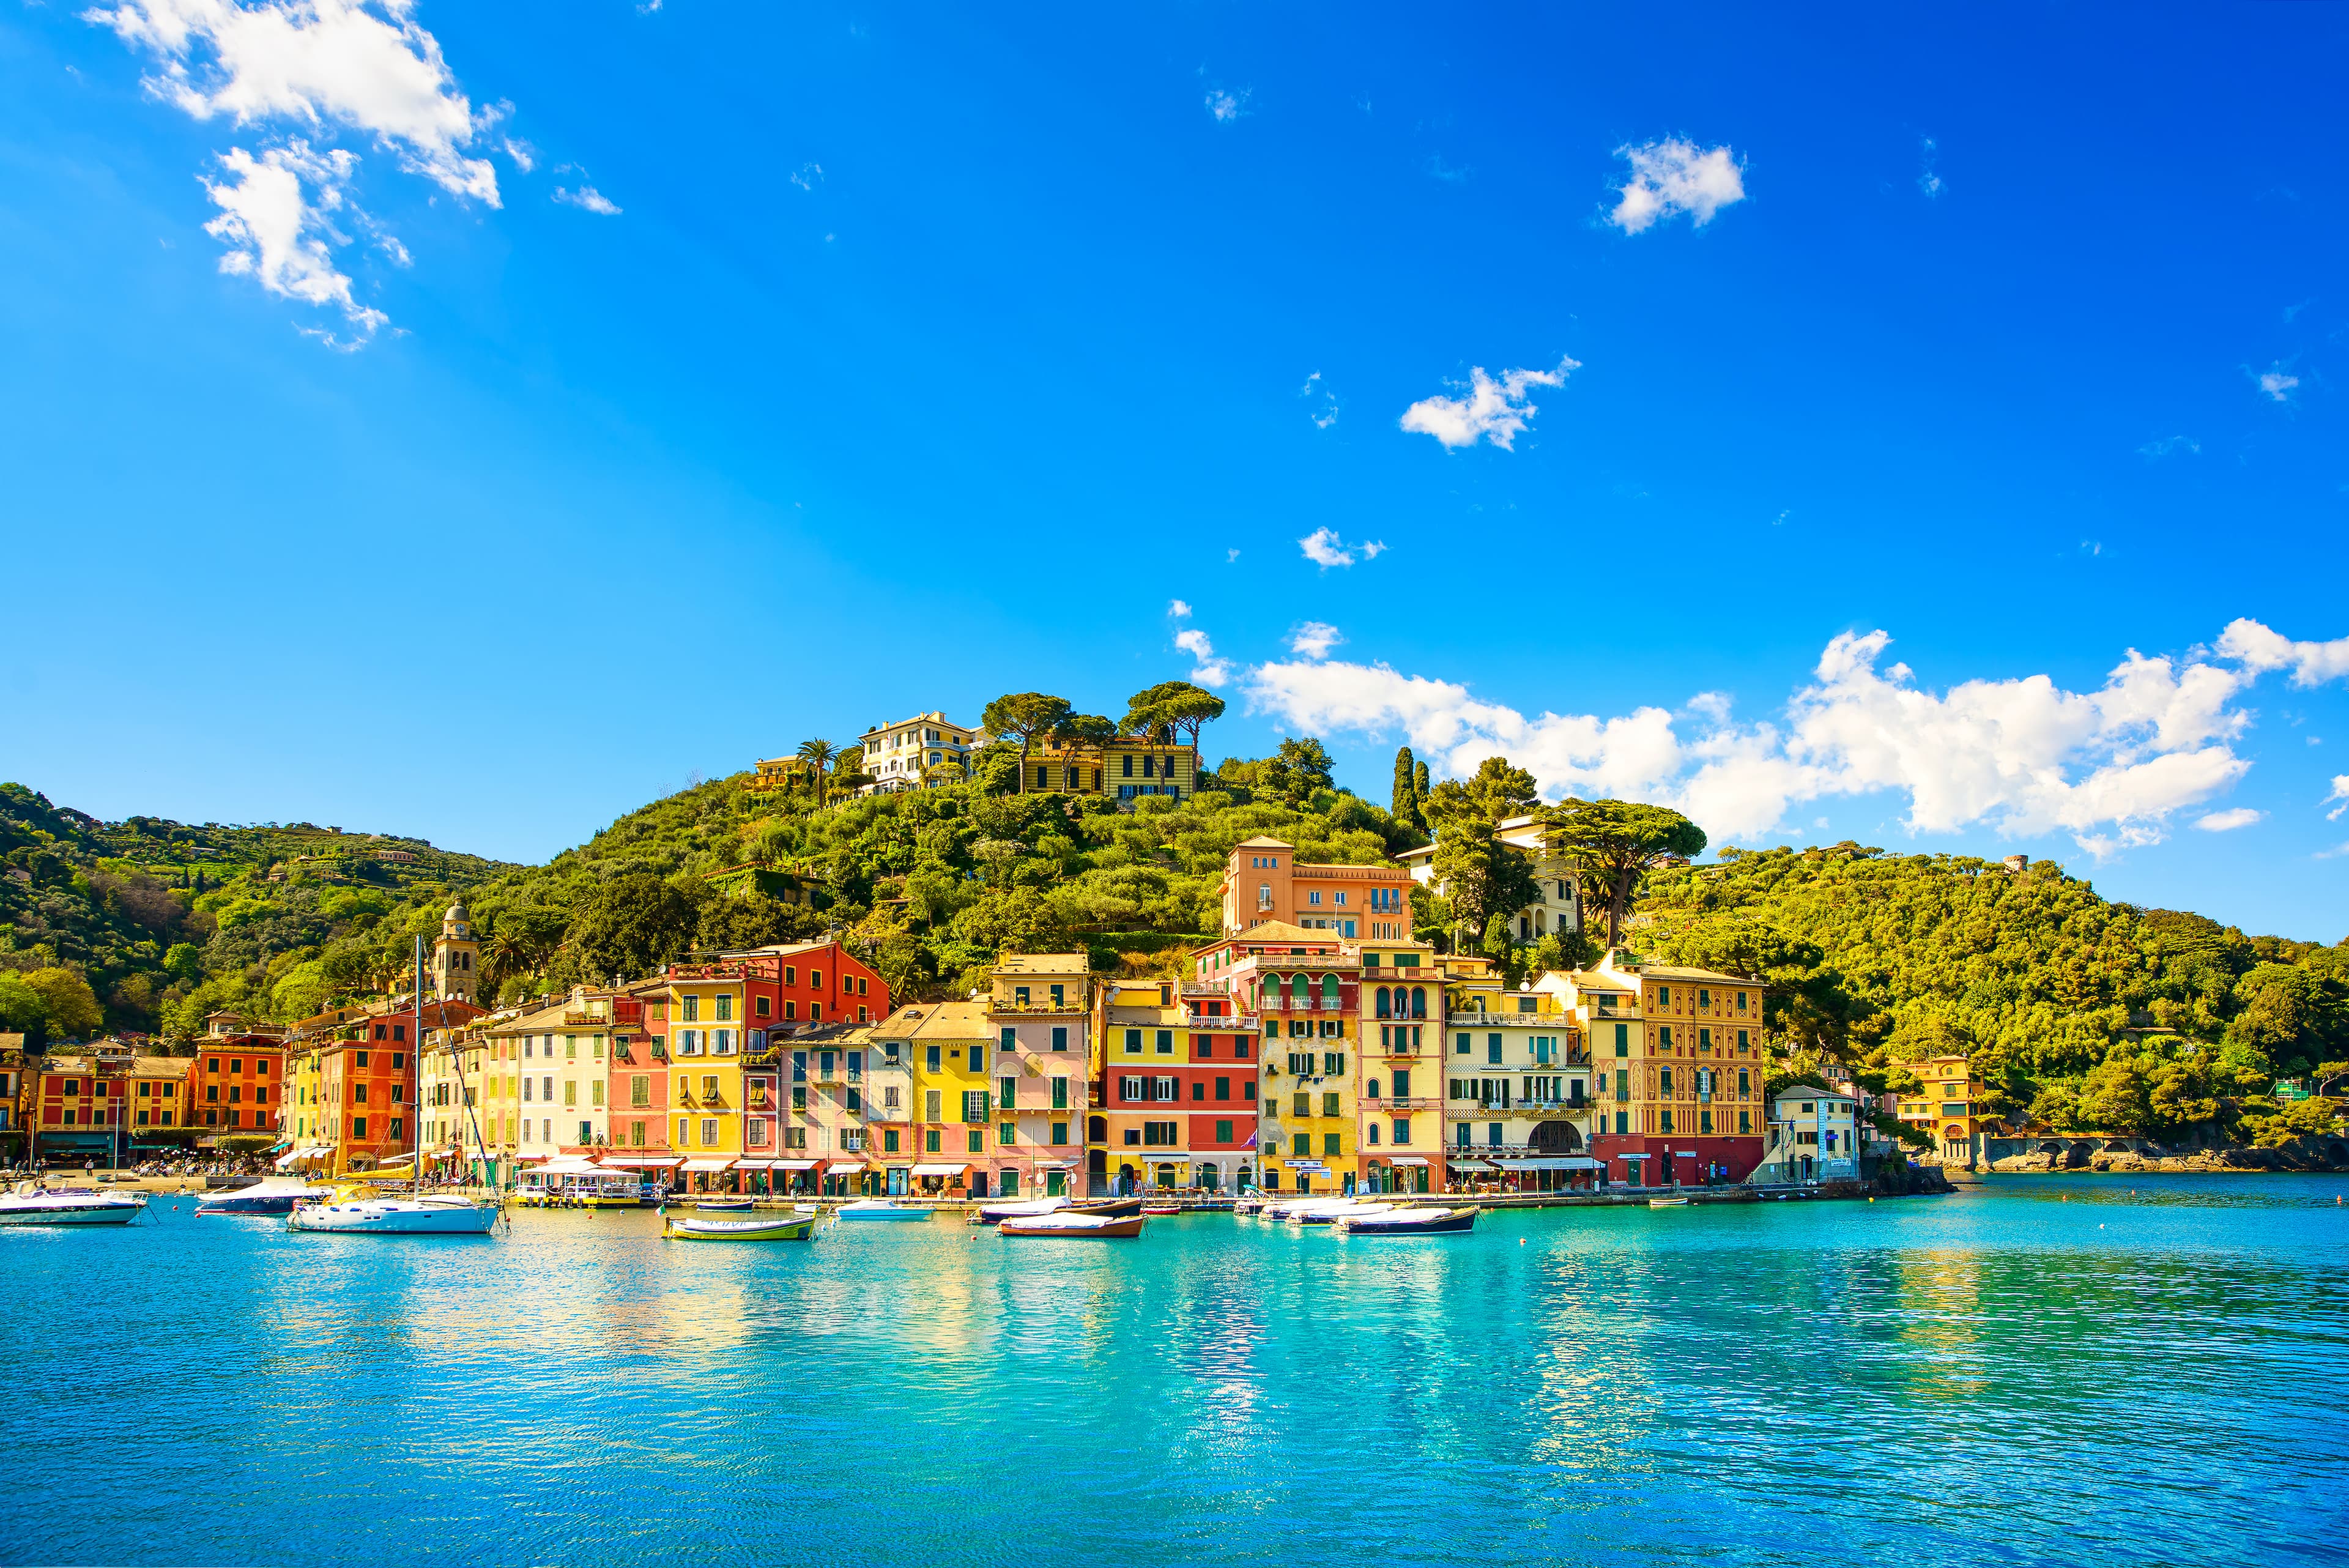 WhereToGo_2015_Italy_Portofino